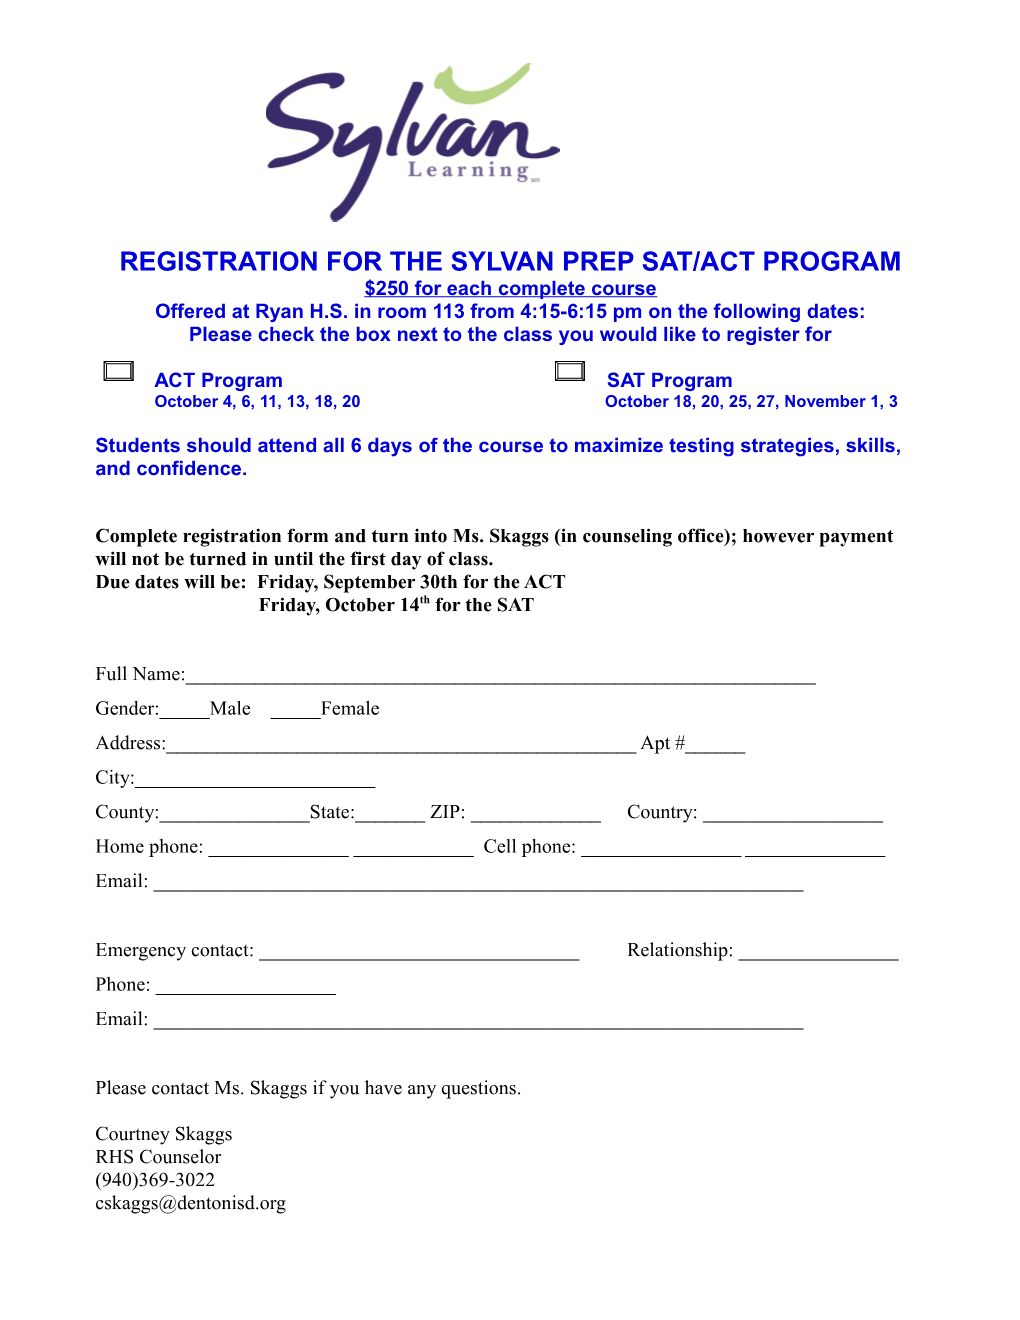 Registration for the Sylvan Prep Sat/Act Program